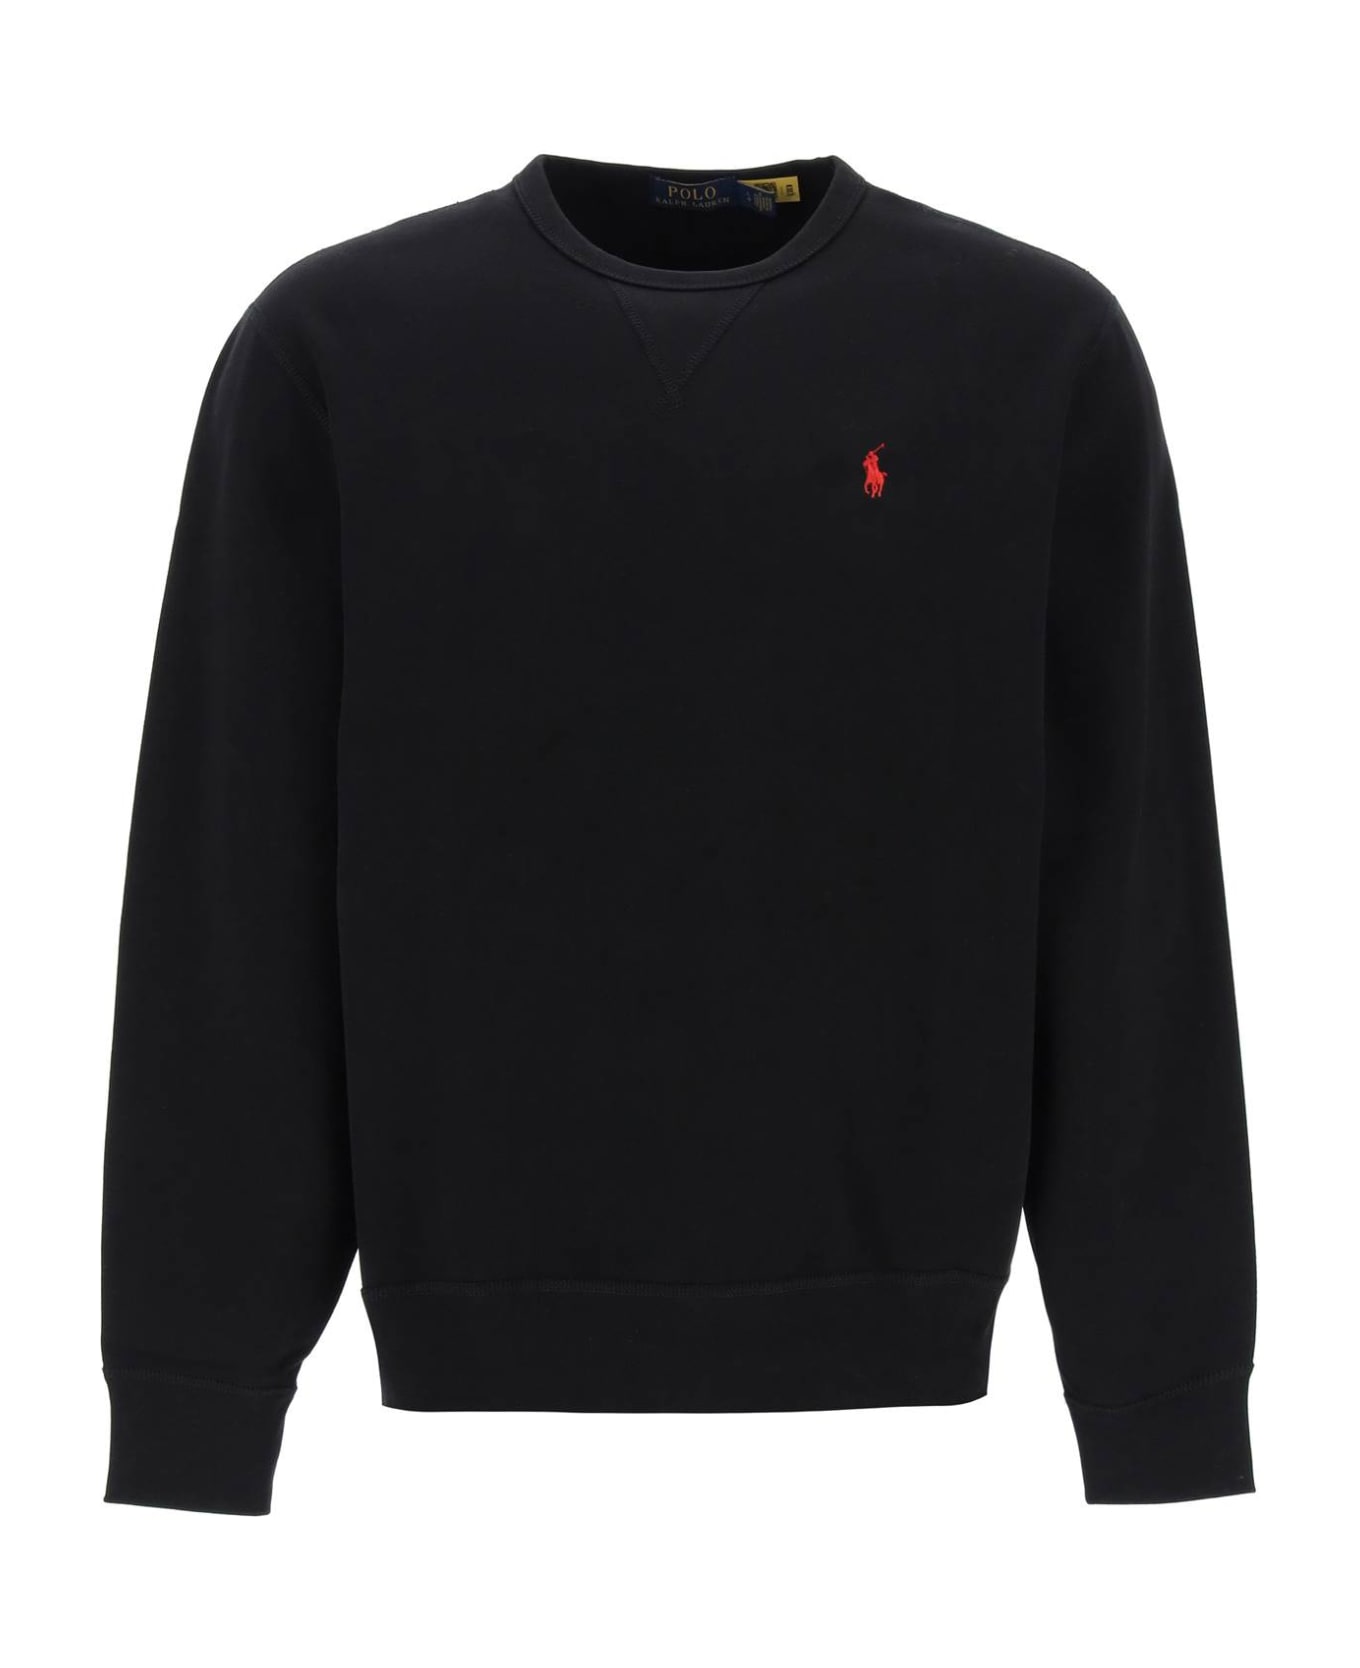 Polo Ralph Lauren Rl Sweatshirt - POLO BLACK (Black)